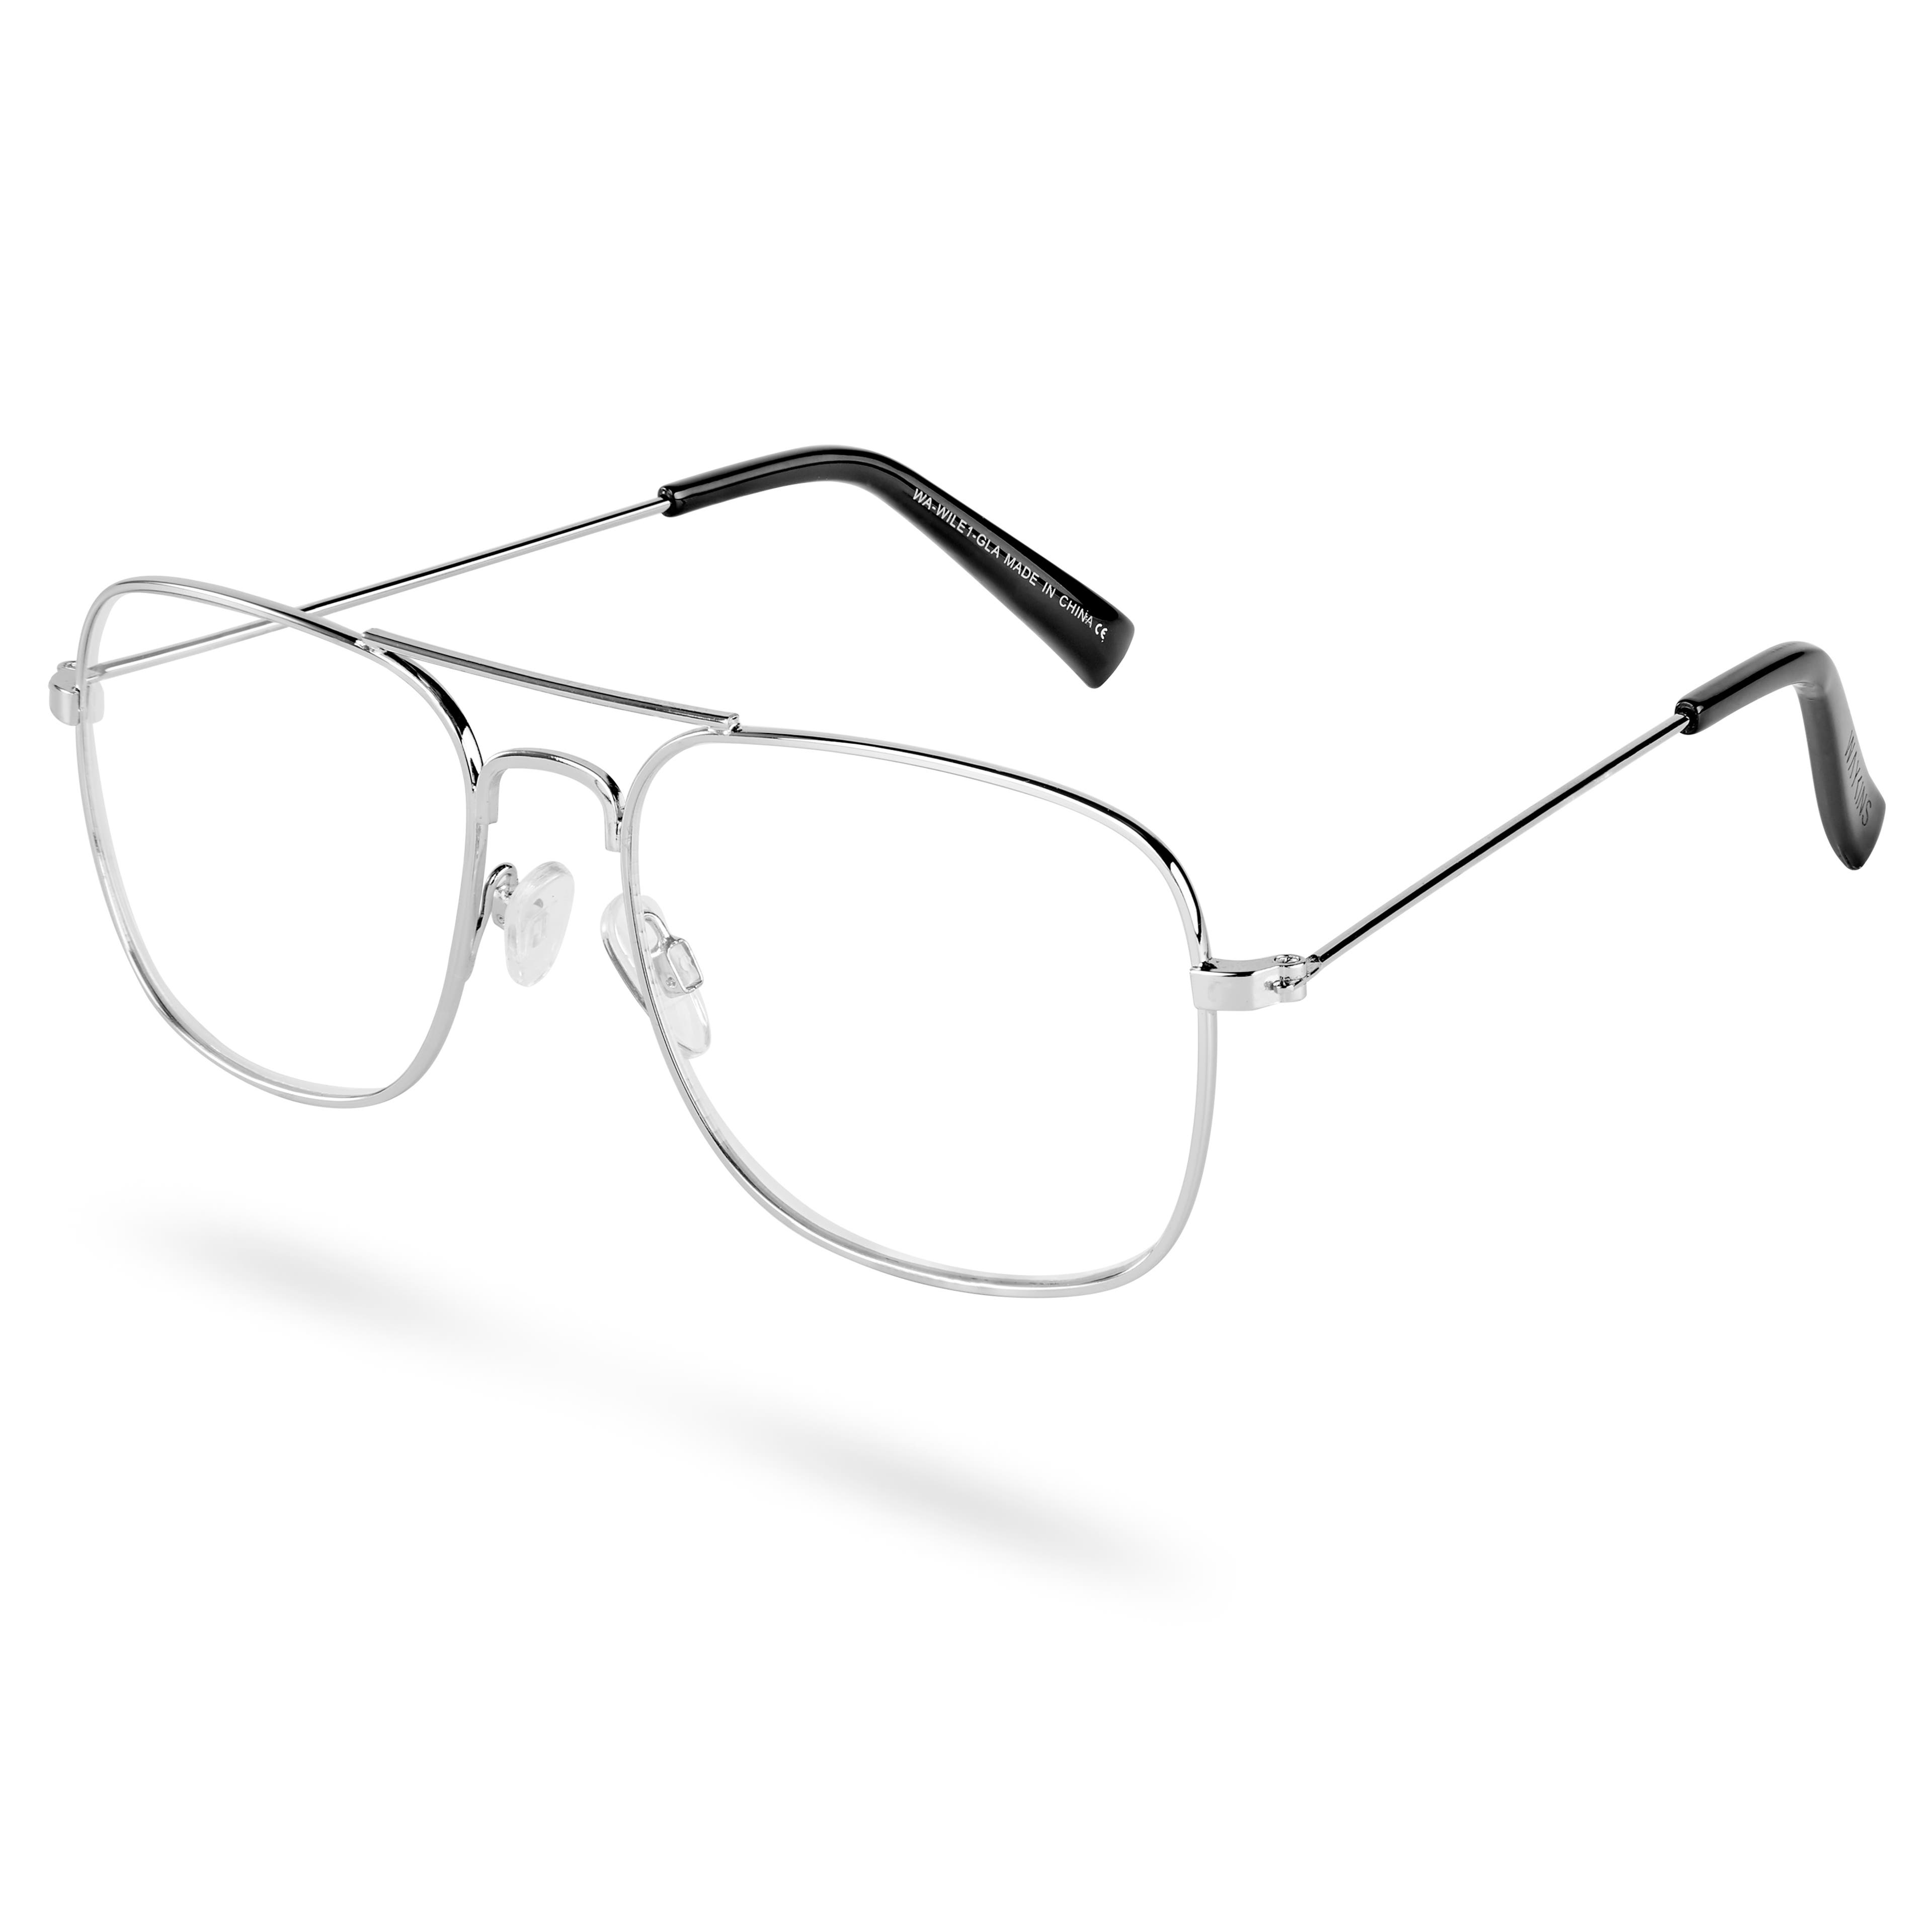 Авиаторски очила с прозрачни стъкла Wile